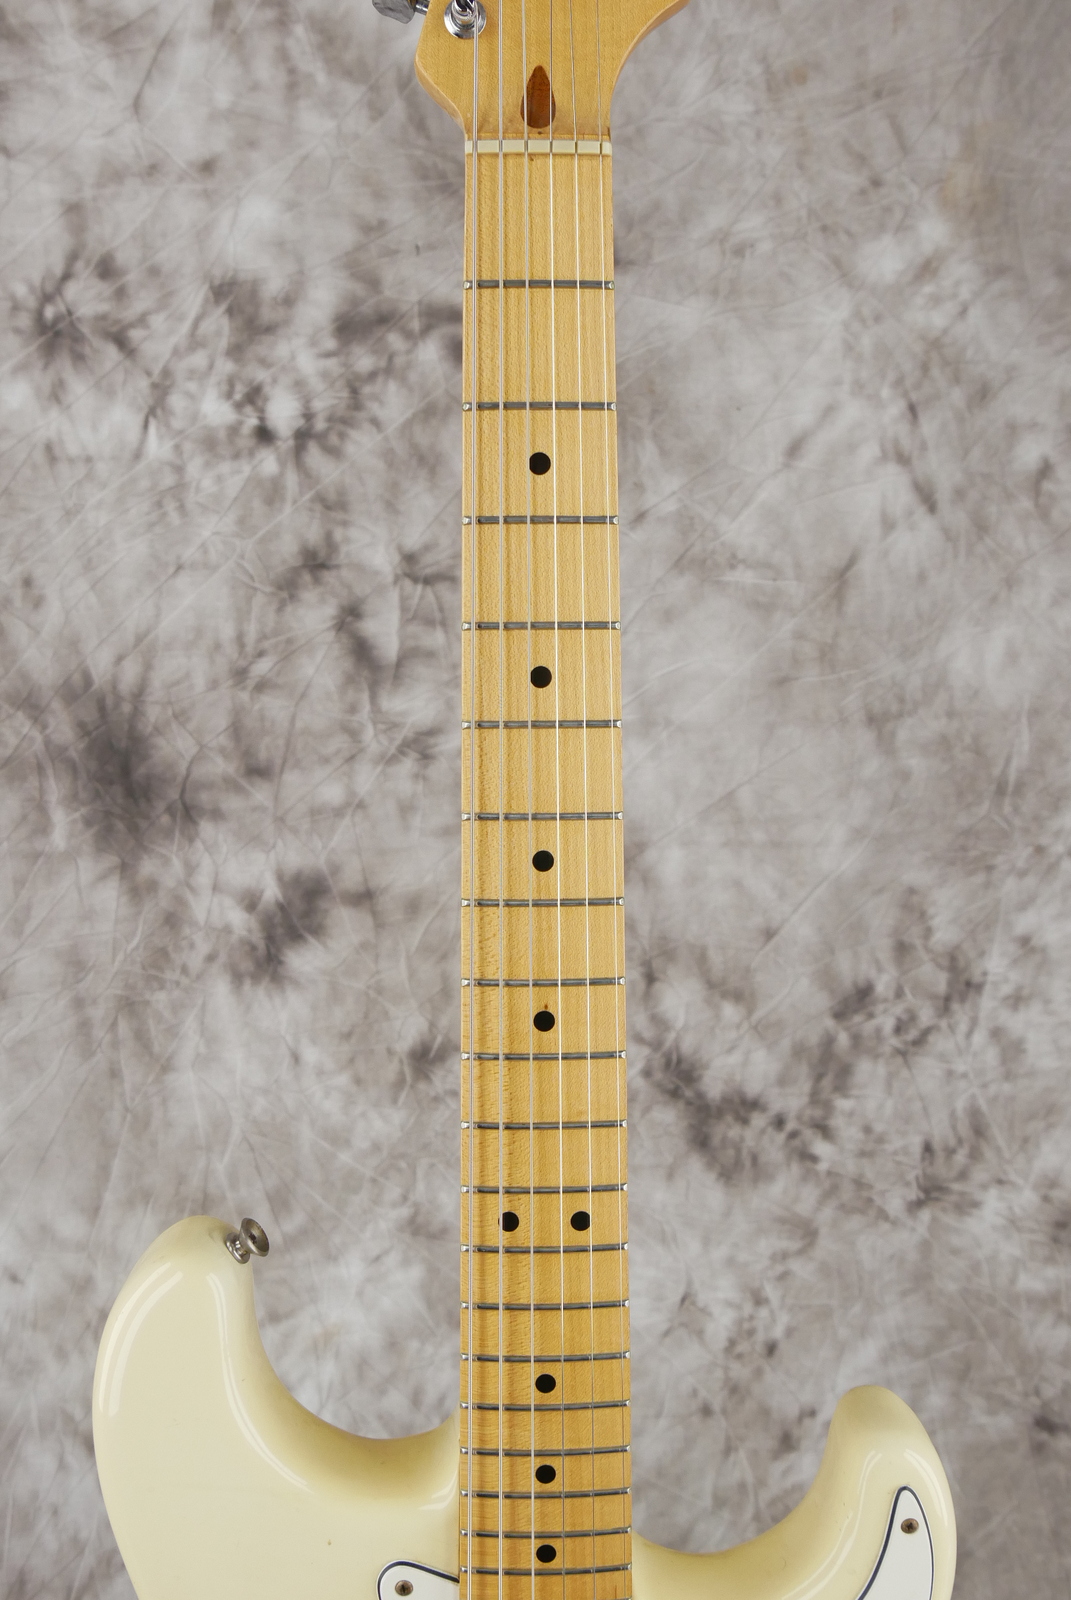 Fender_Stratocaster_Dan_smith_1982_tremolo_hardcase-011.JPG